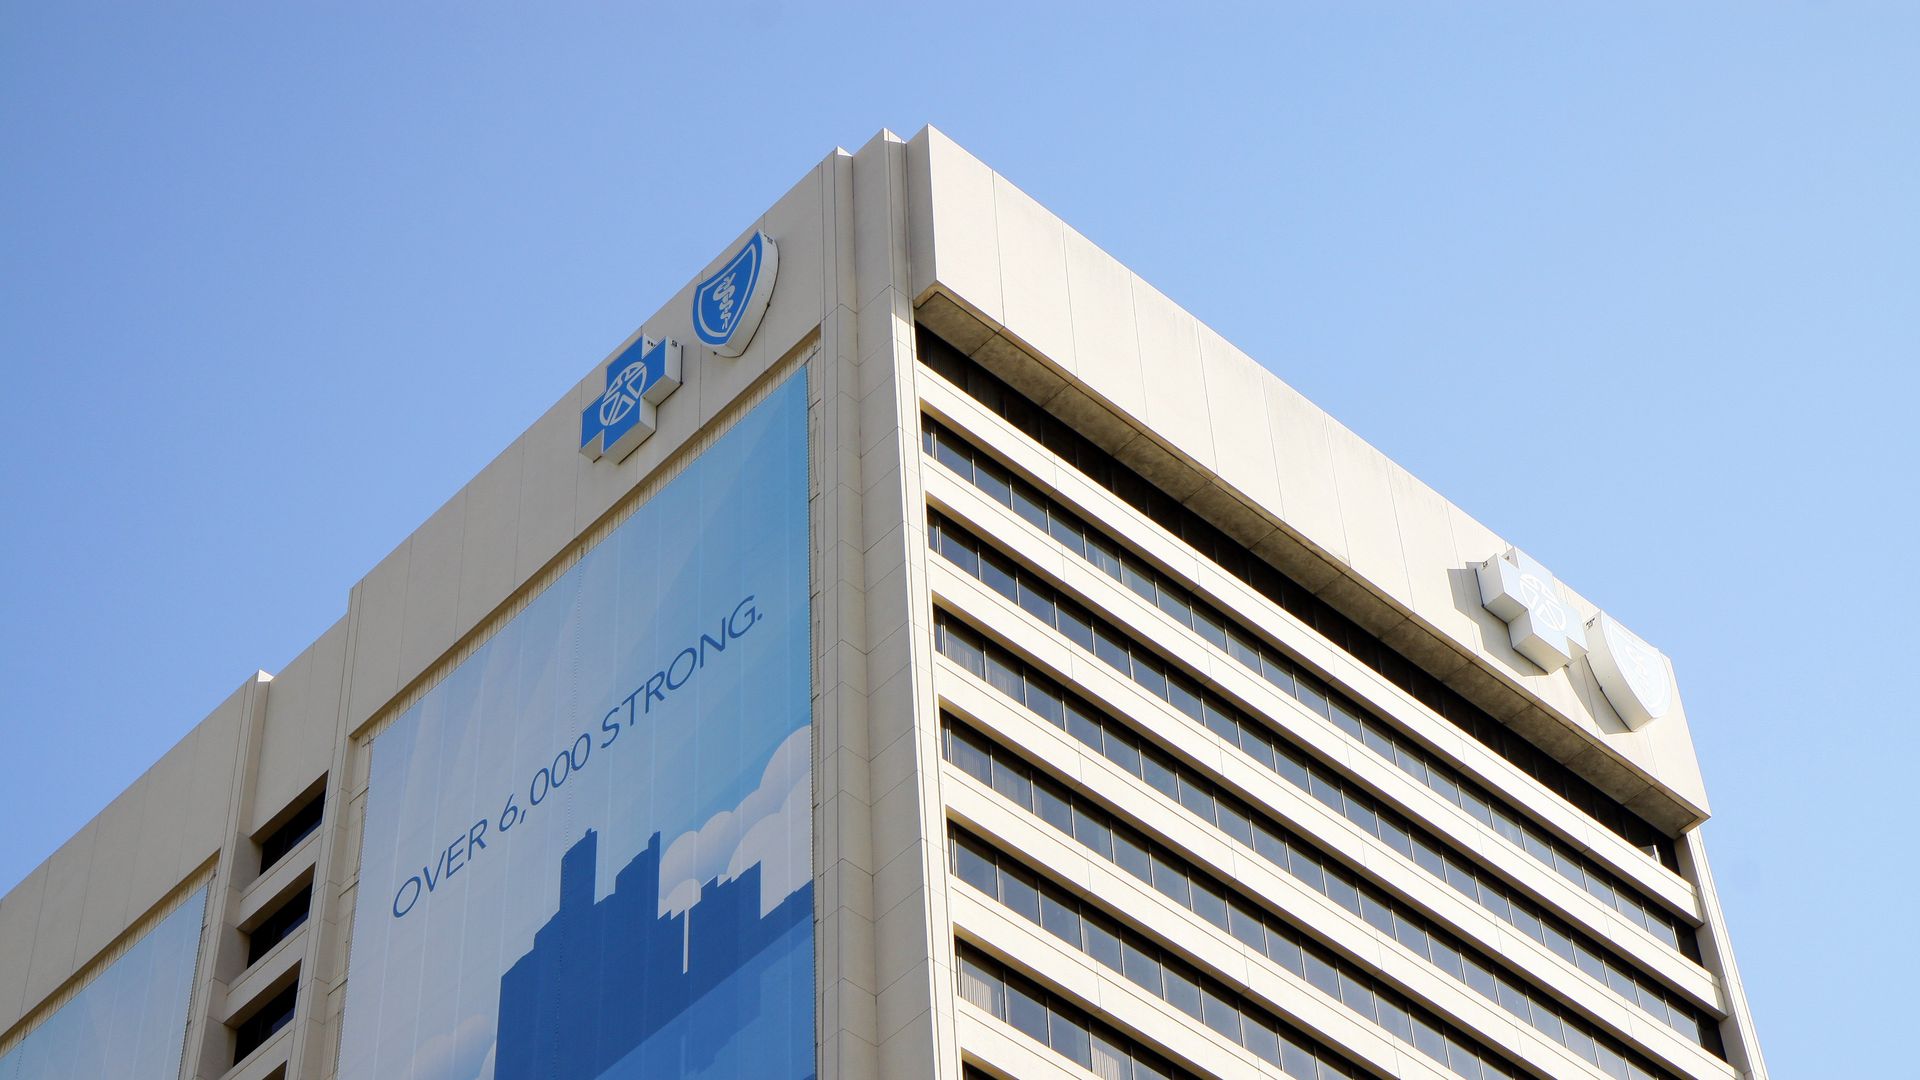 Blue Cross Blue Shield building and logo